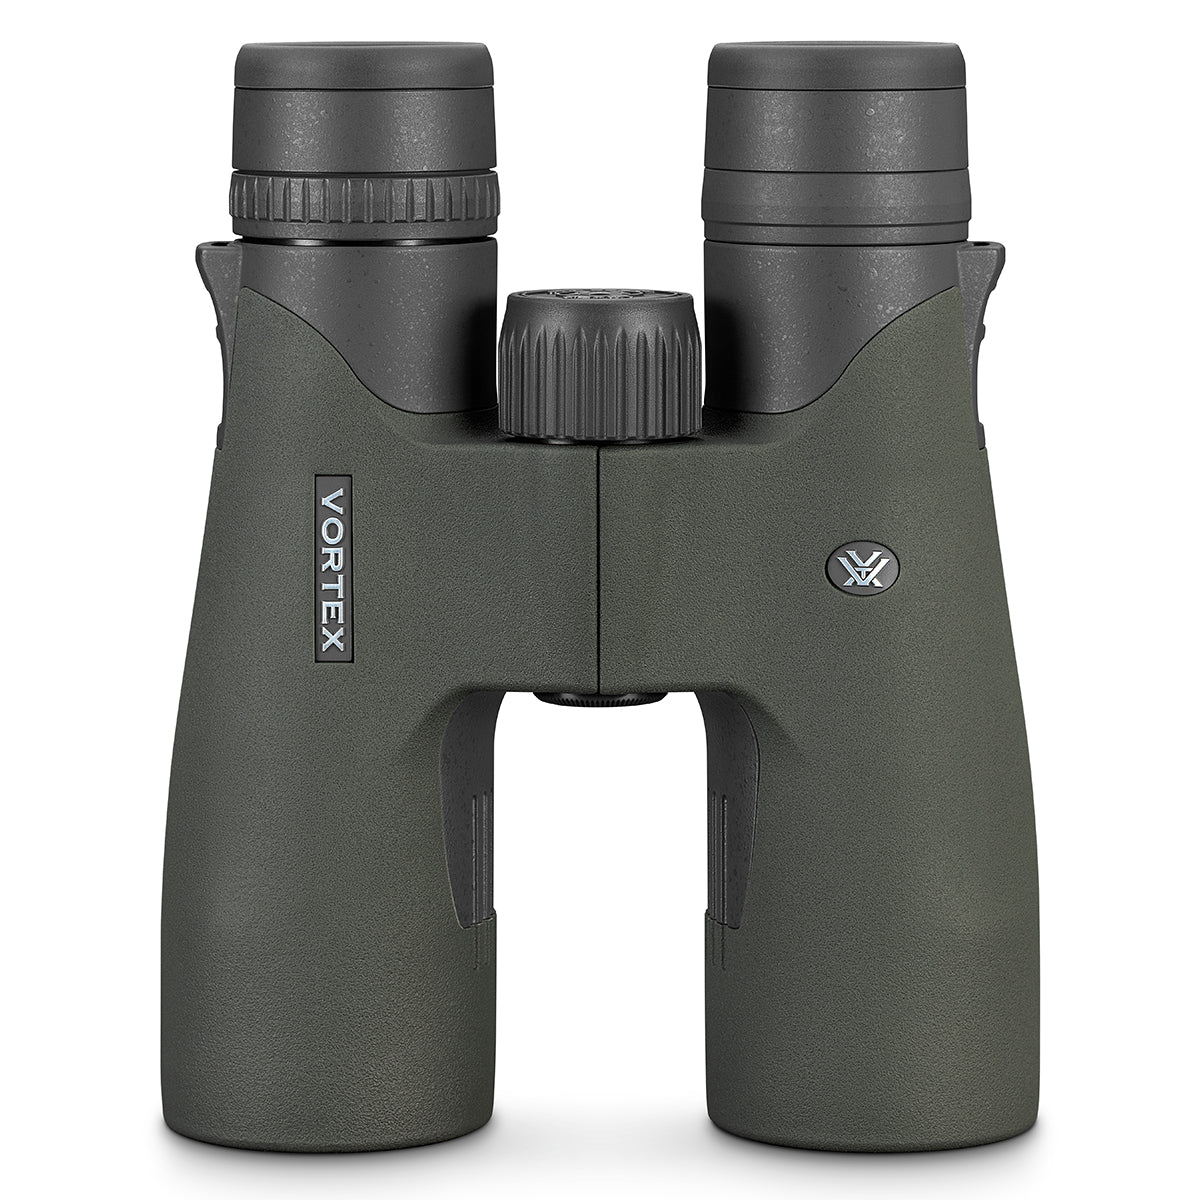 Vortex Razor UHD 10x42 Binocular in  by GOHUNT | Vortex Optics - GOHUNT Shop